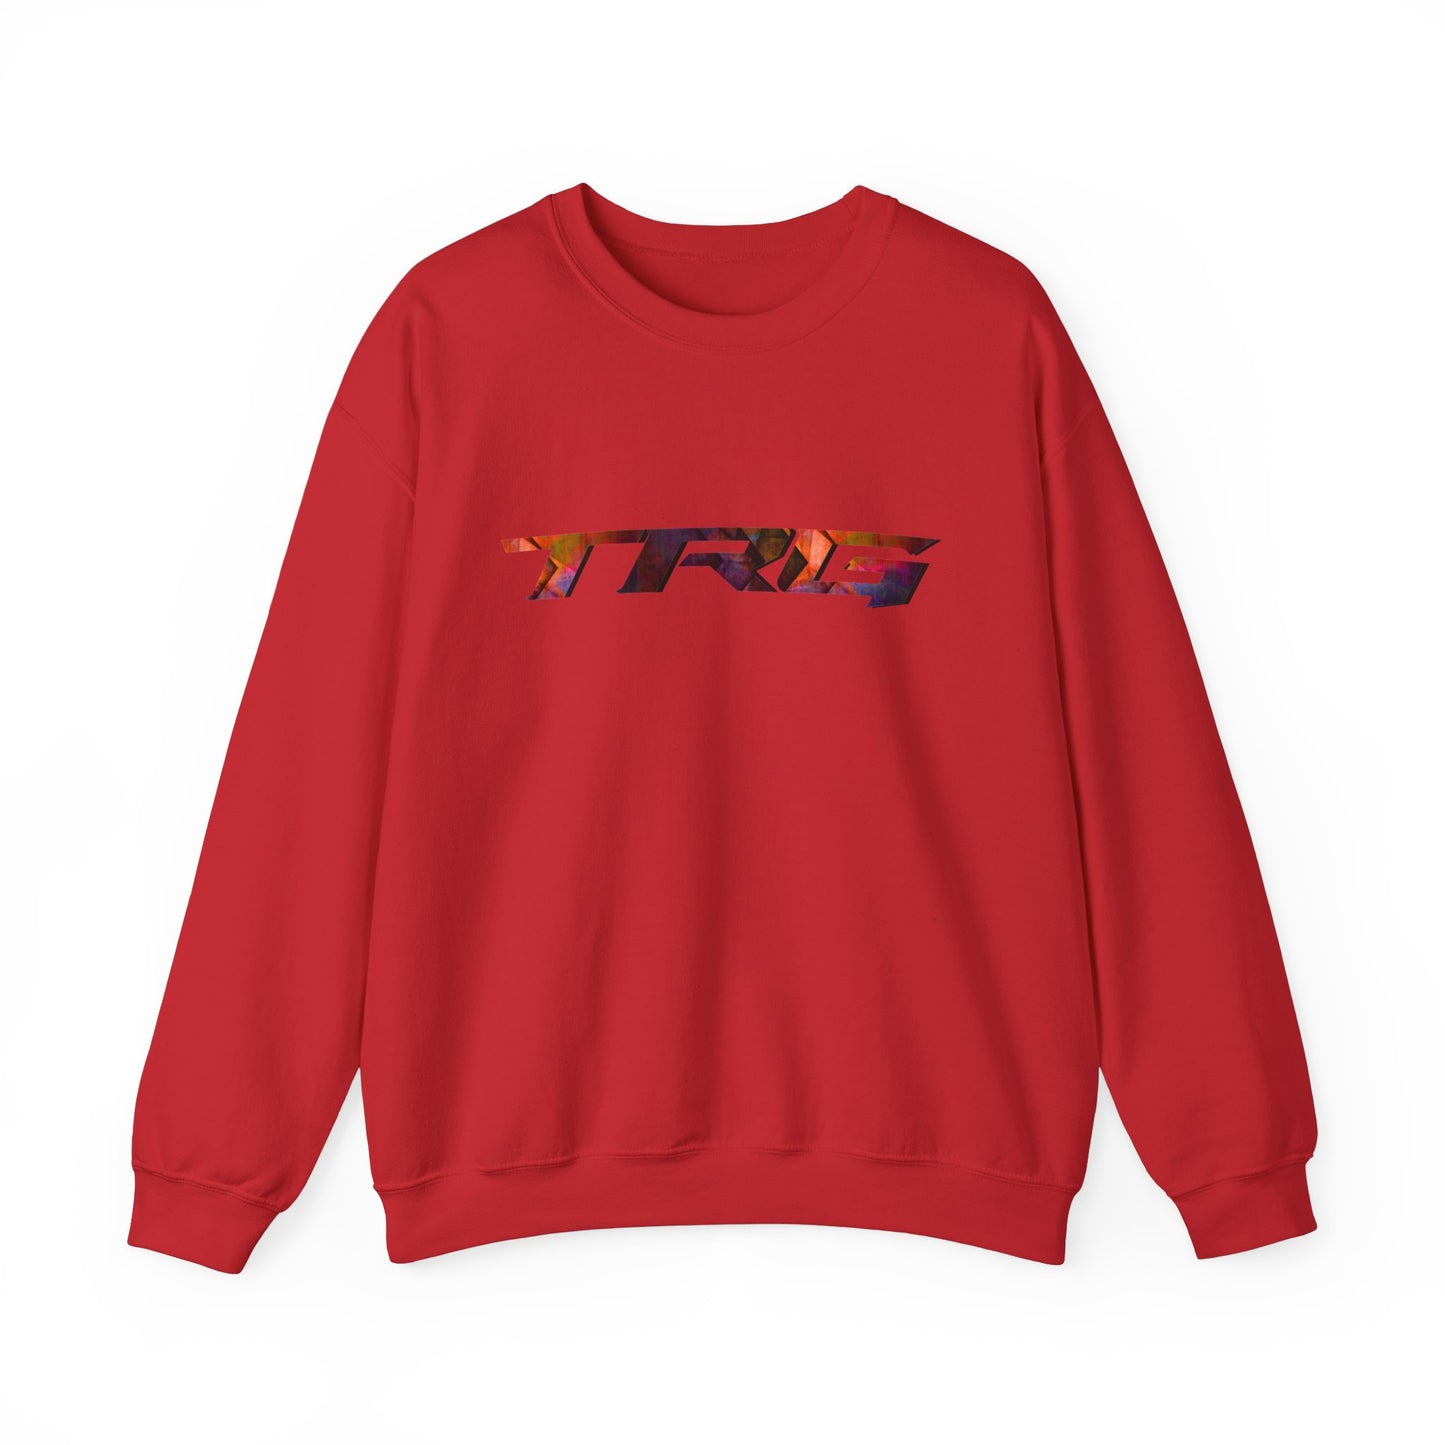 TRG Crewneck Sweatshirt